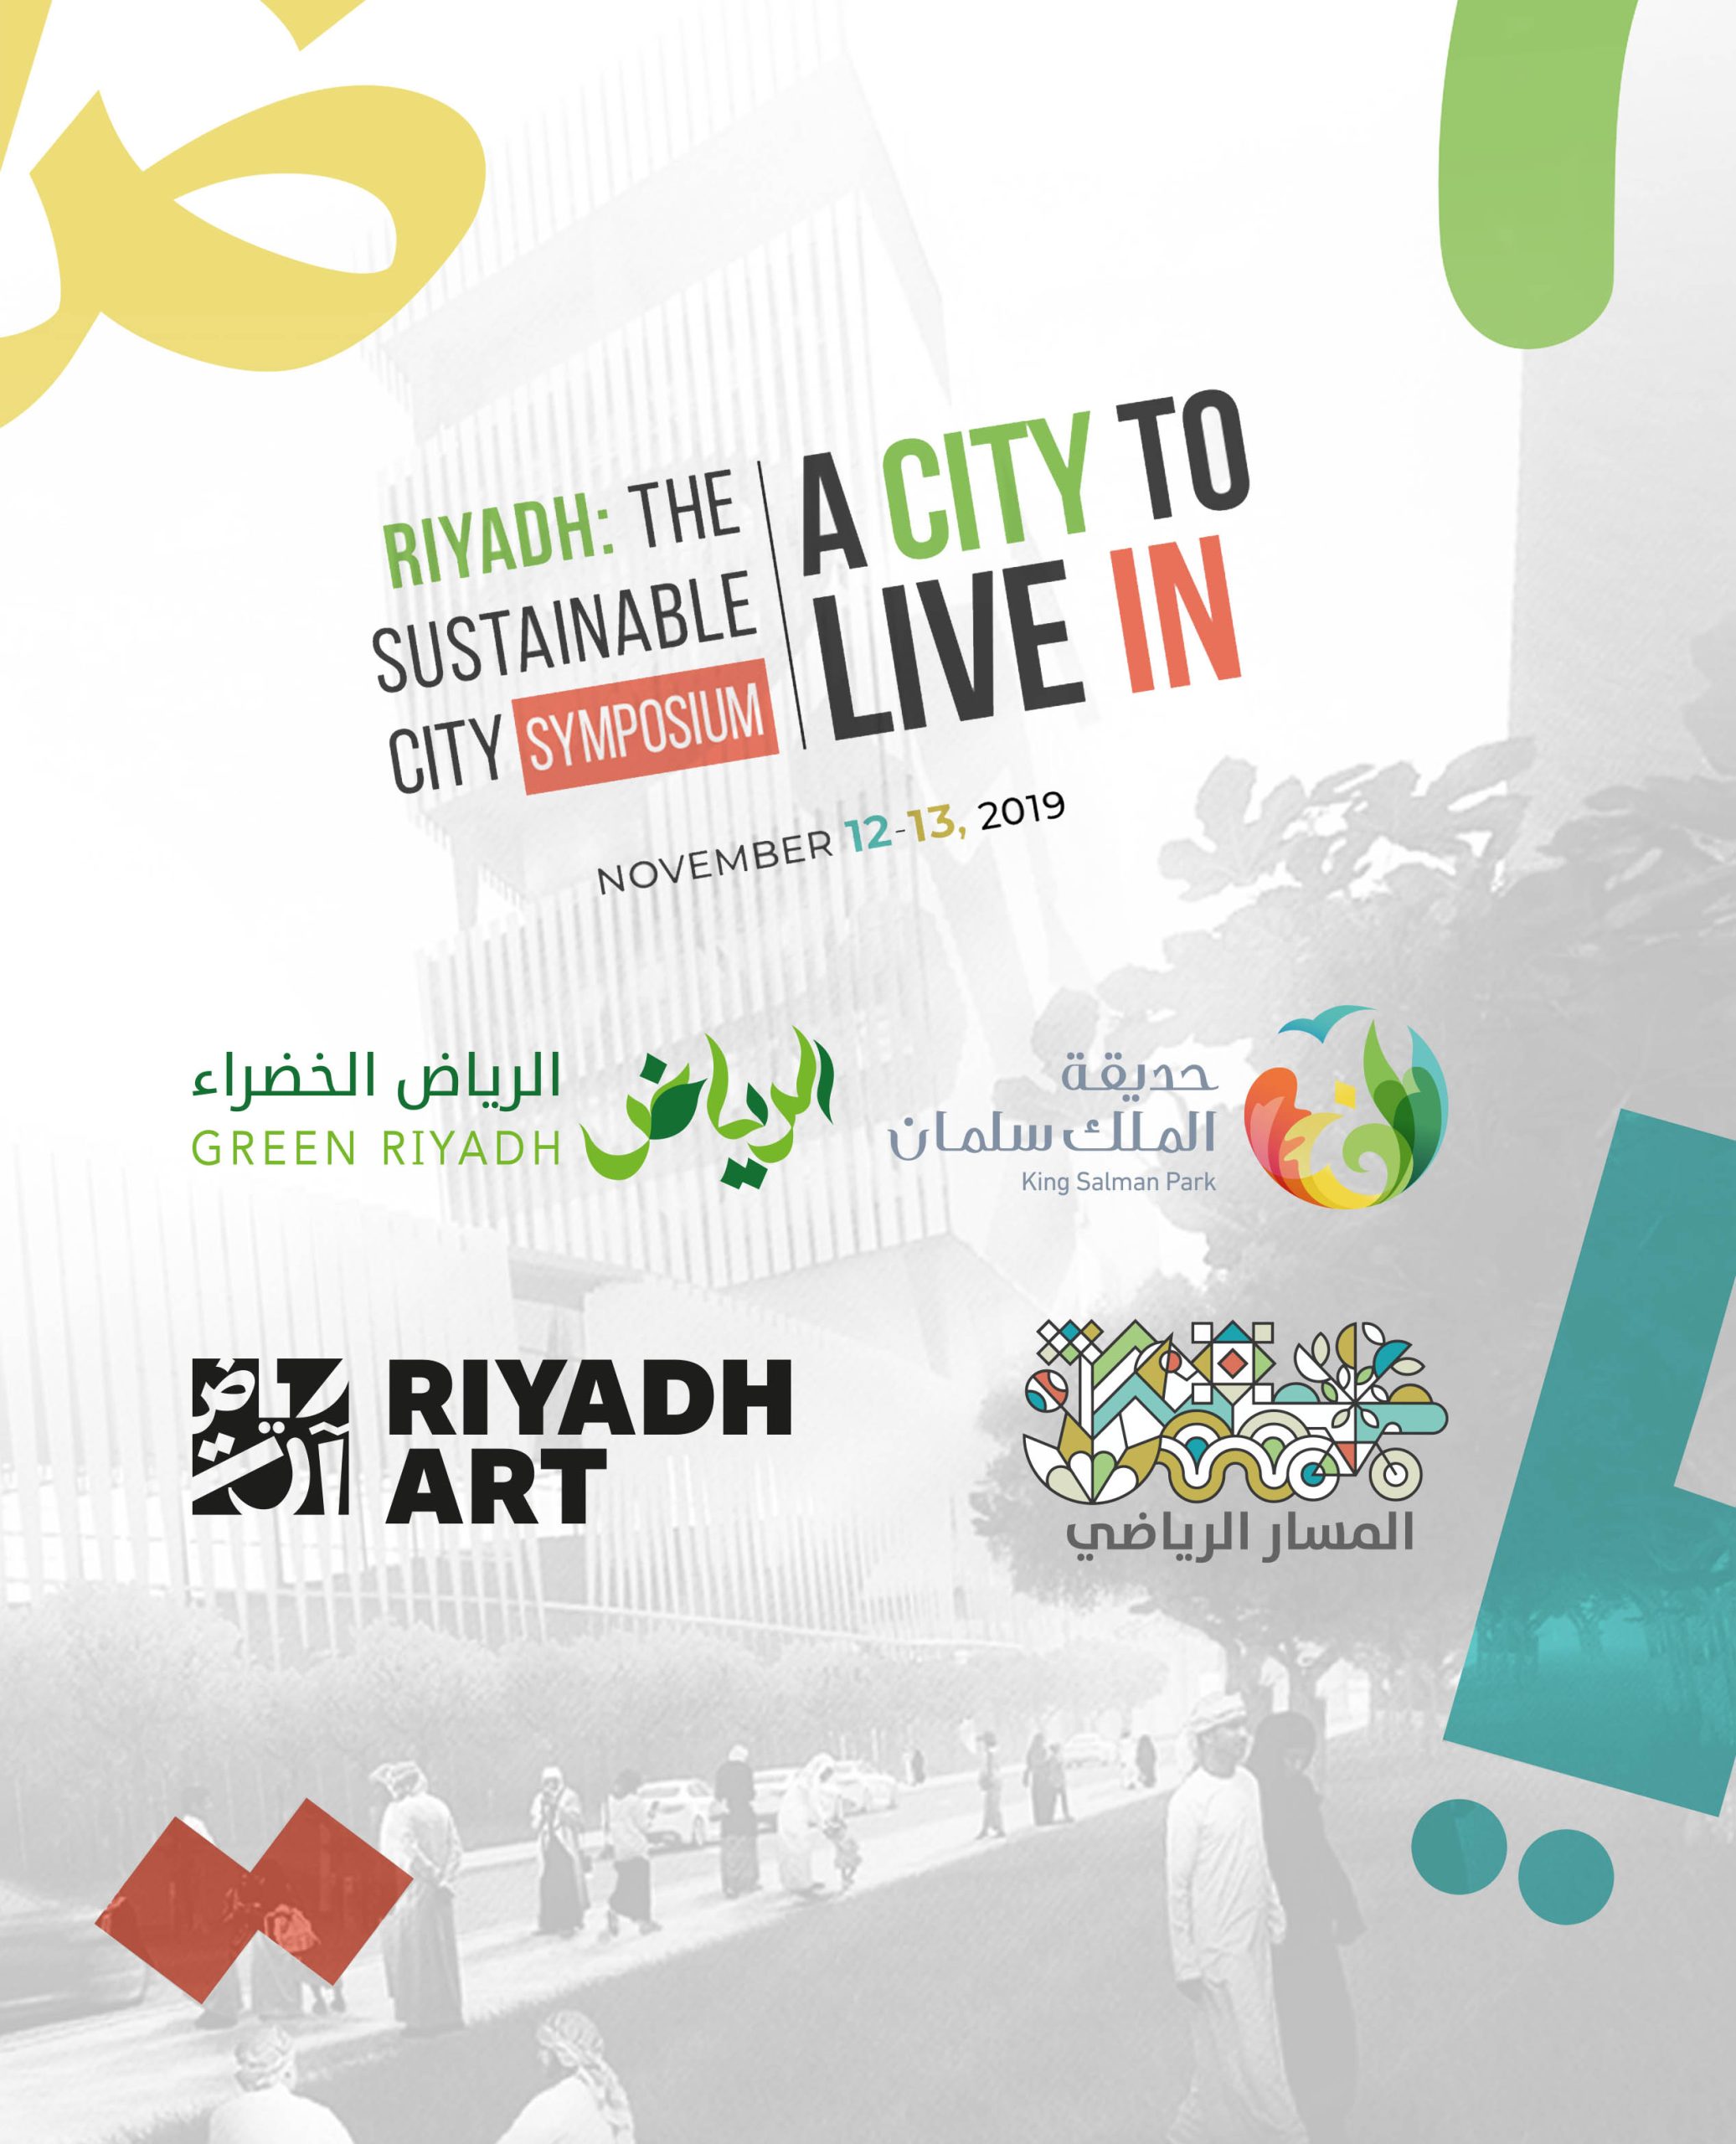 Riyadh: The Sustainable City Symposium